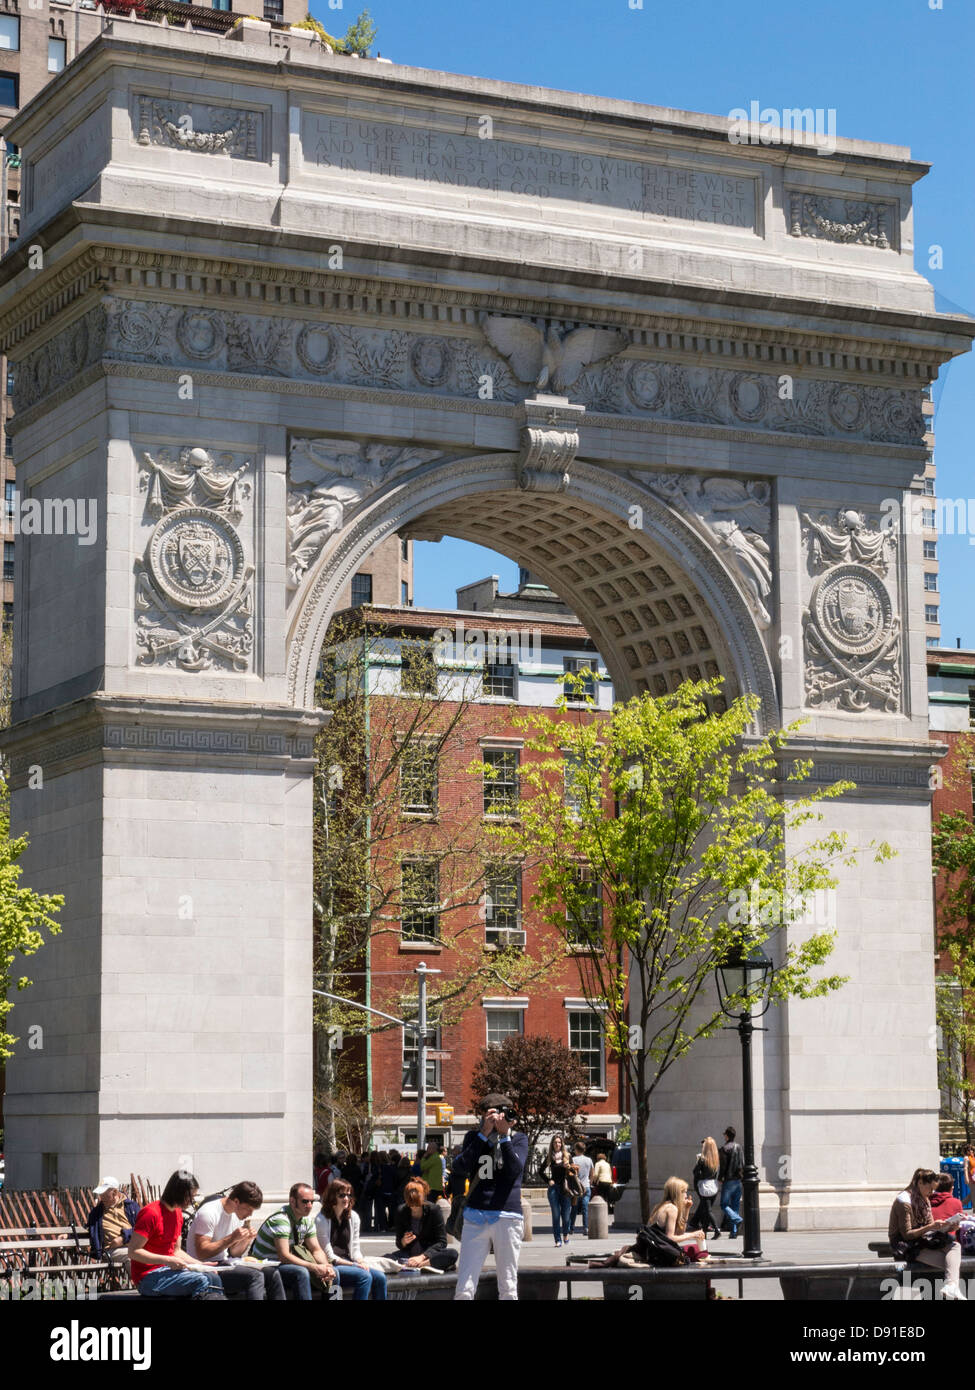 Washington Square Arch, Washington Square Park, Greenwich Village, NEW YORK Banque D'Images